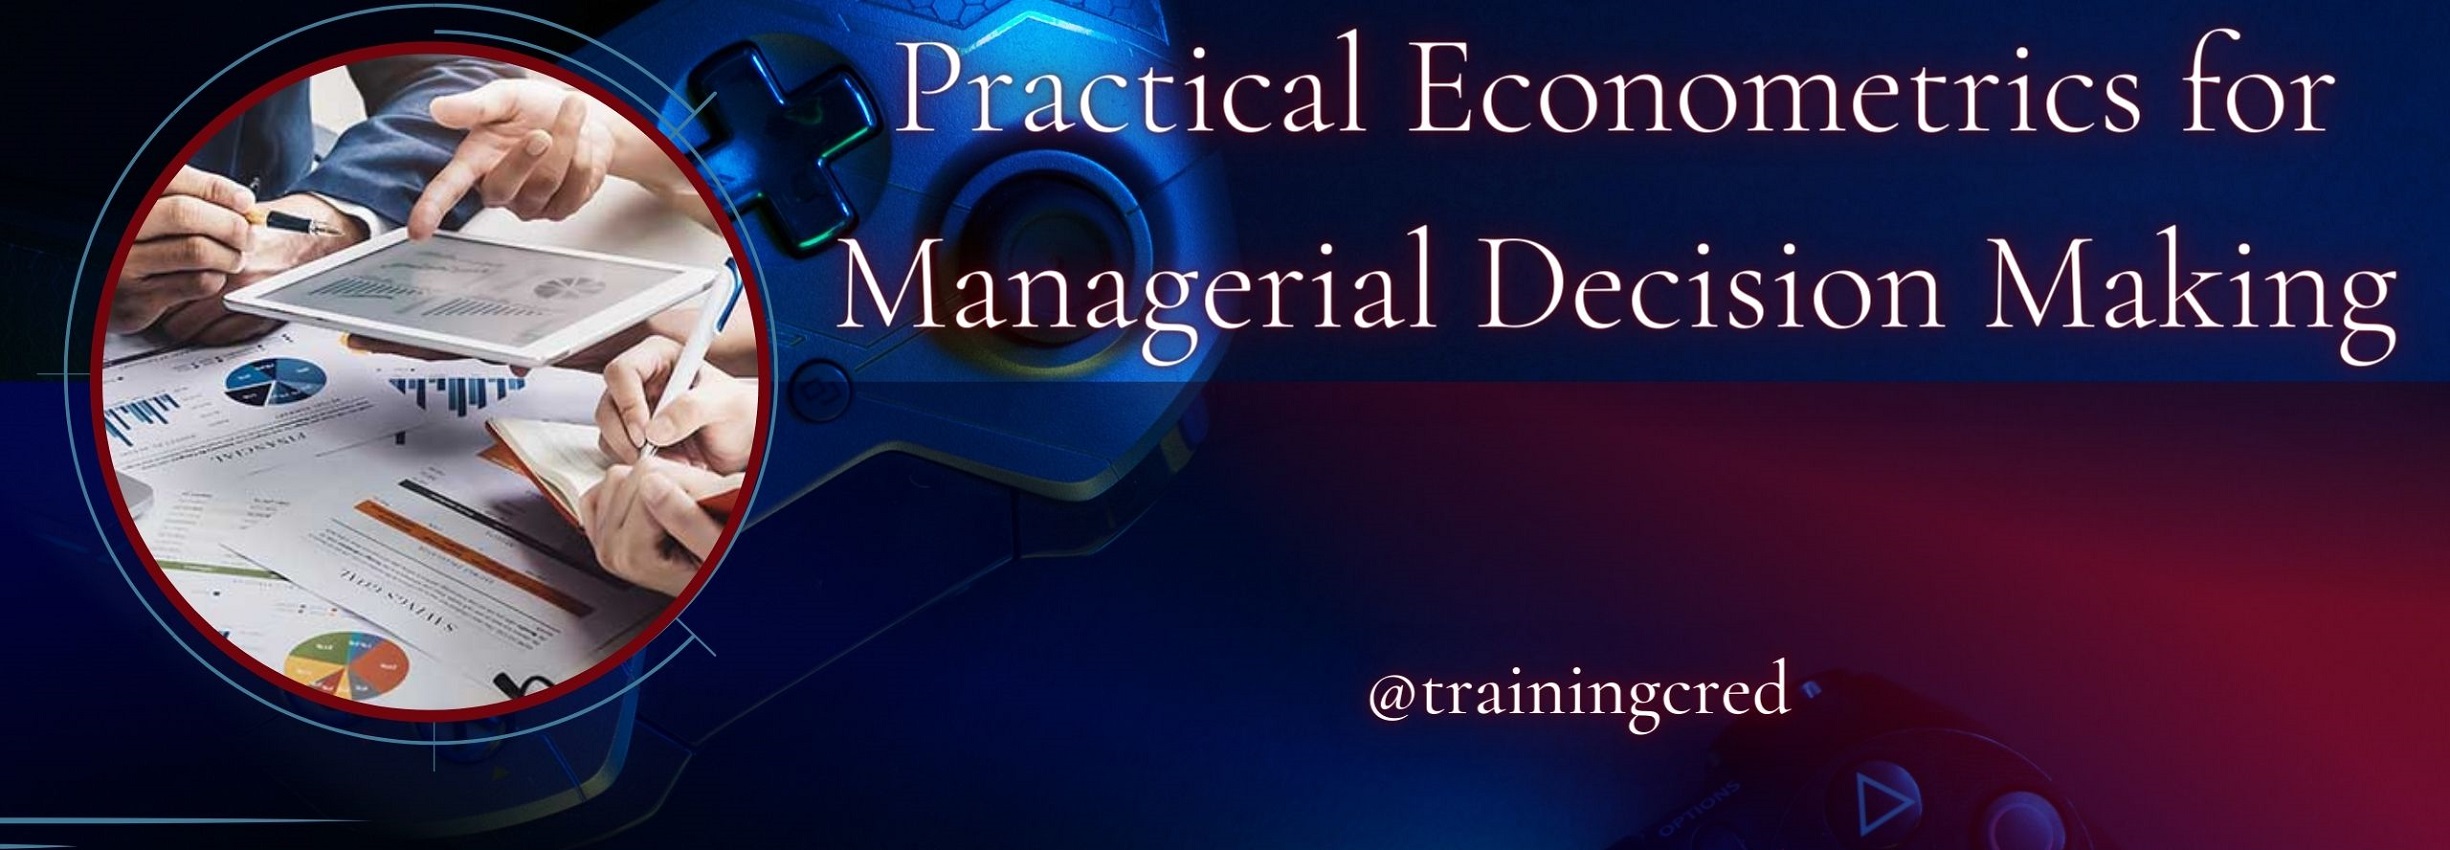 Practical Econometrics for Managerial Decision Making Training